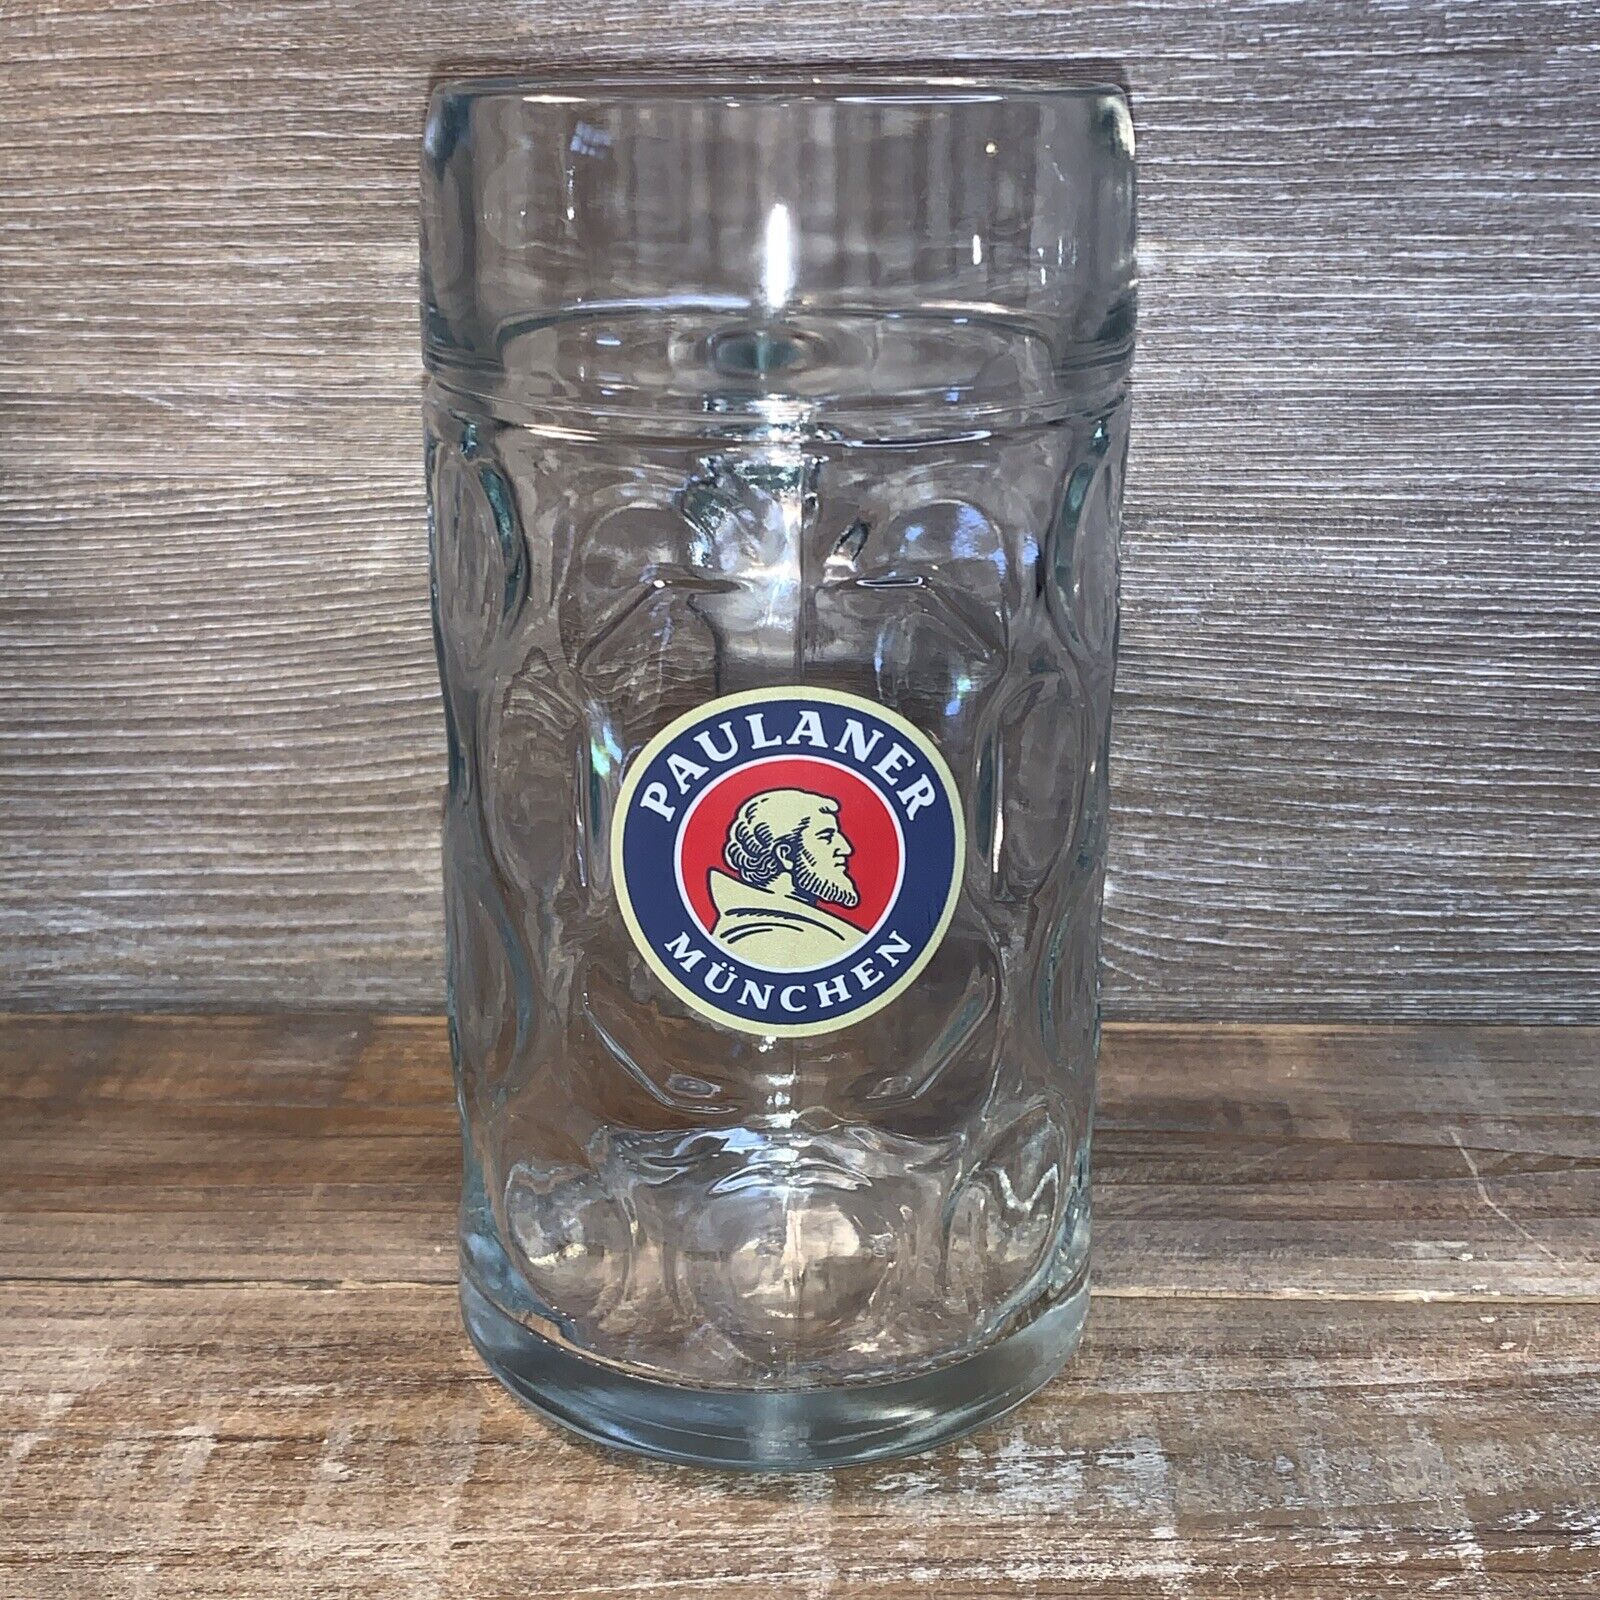 Paulaner Munchen 1 Liter Dimpled German Munich Beer Stein Glass (Mug Cup) (Used)